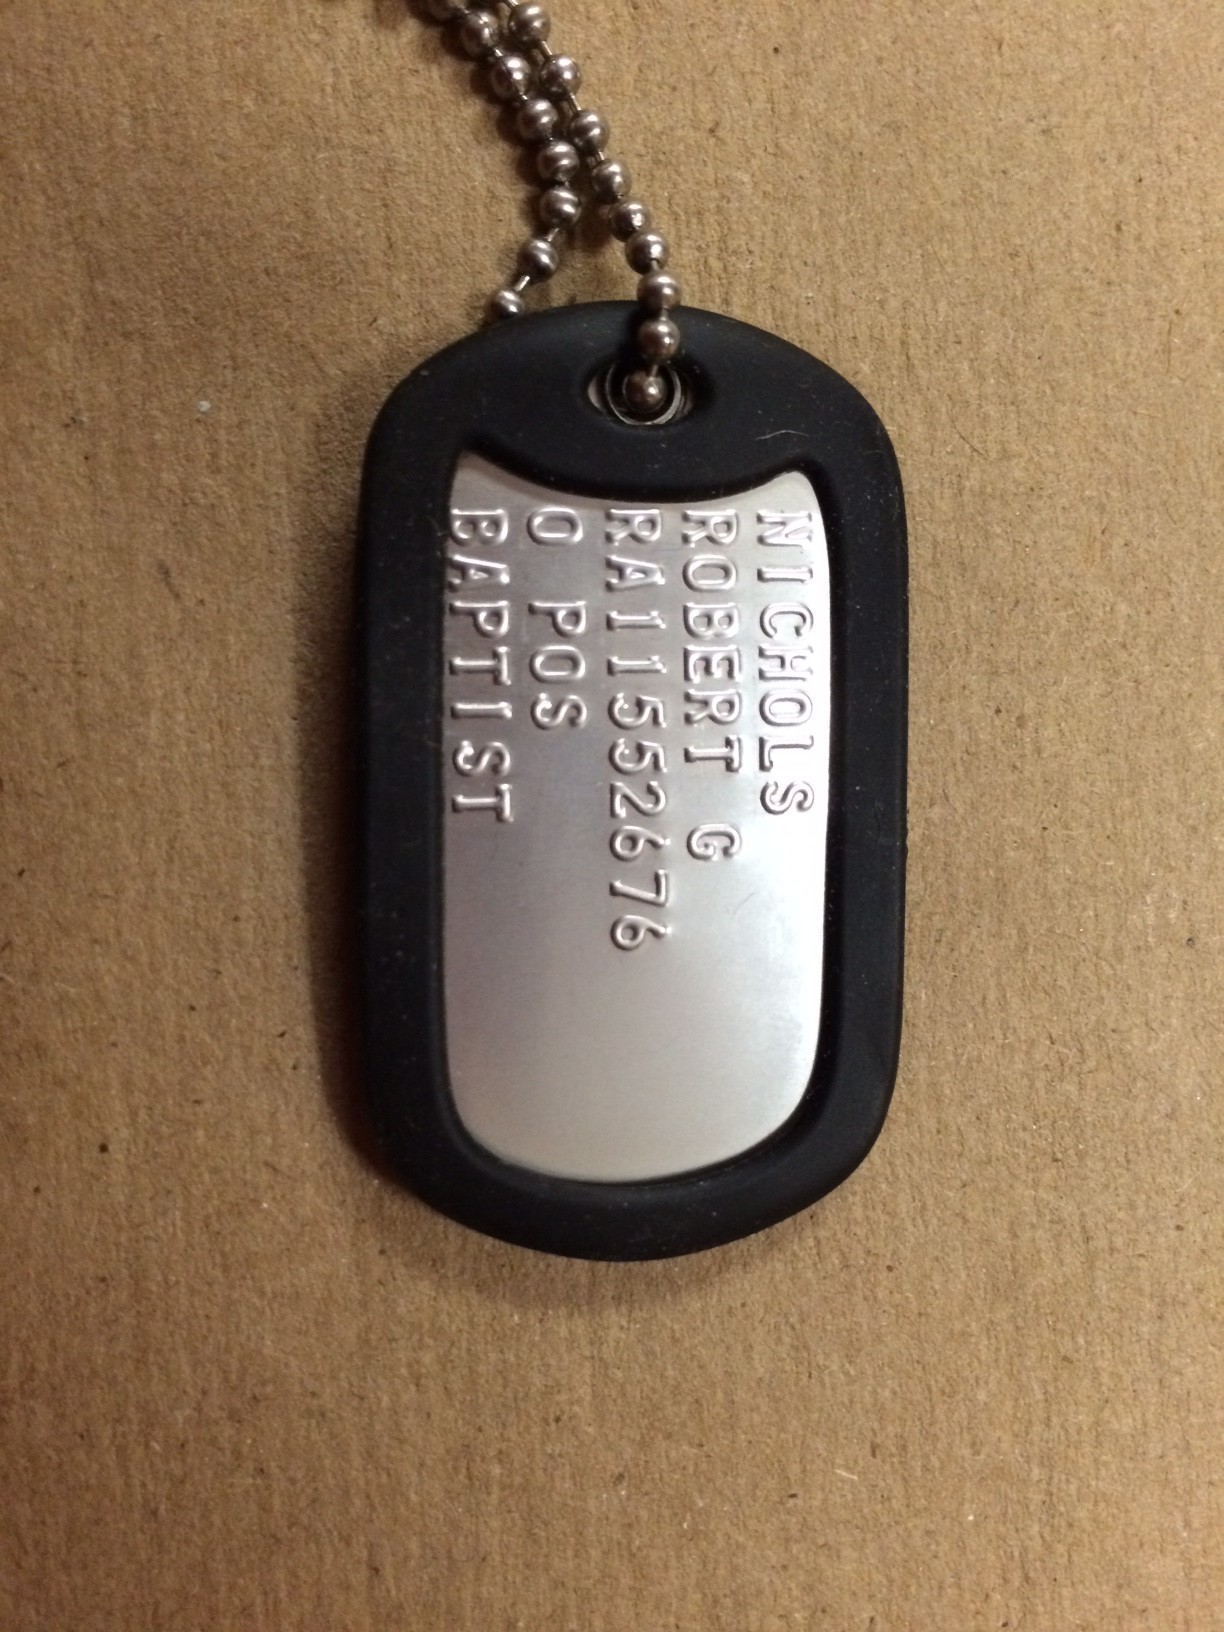 Army dog tags